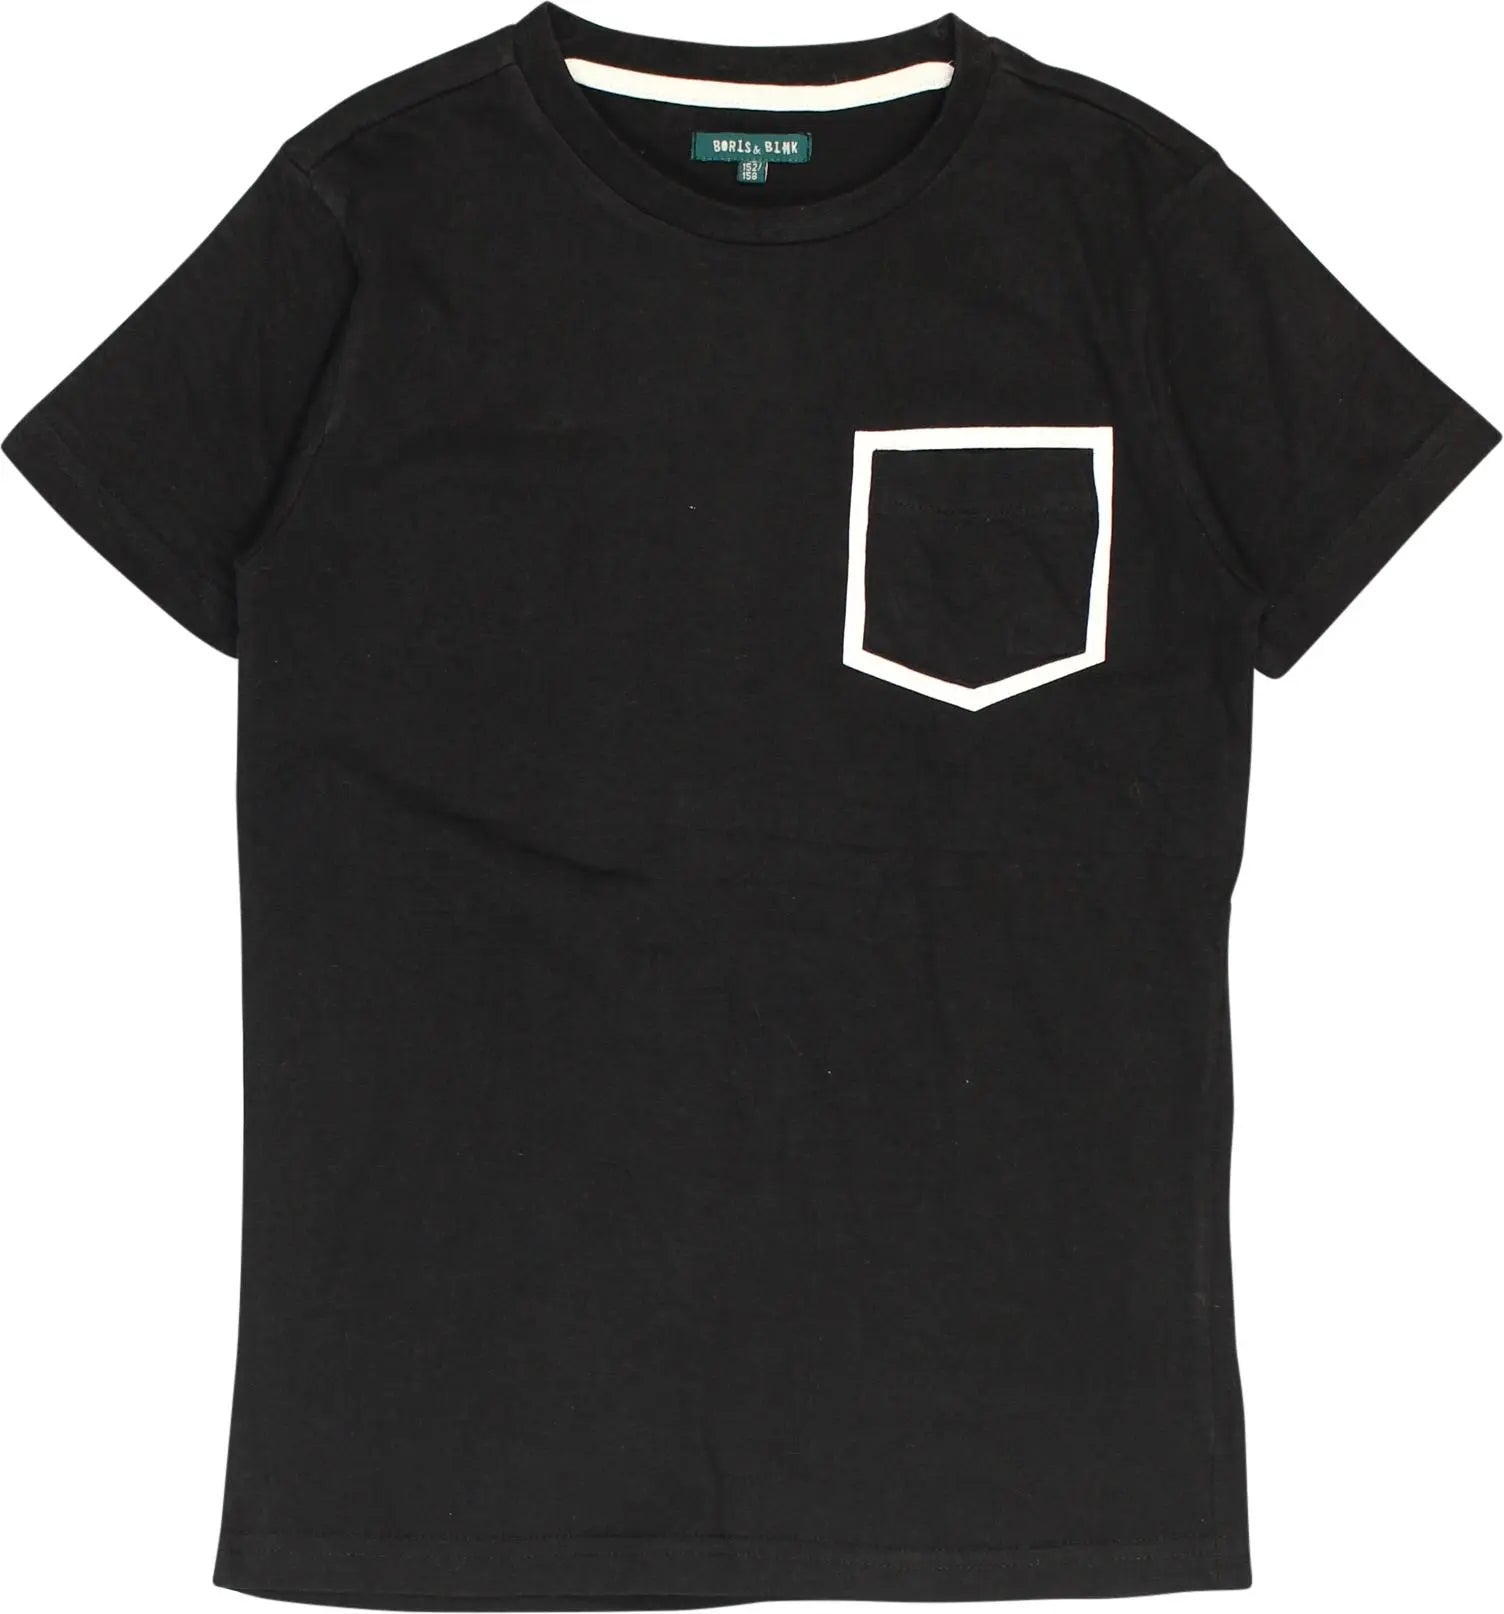 Boris & Bink - Black T-shirt- ThriftTale.com - Vintage and second handclothing